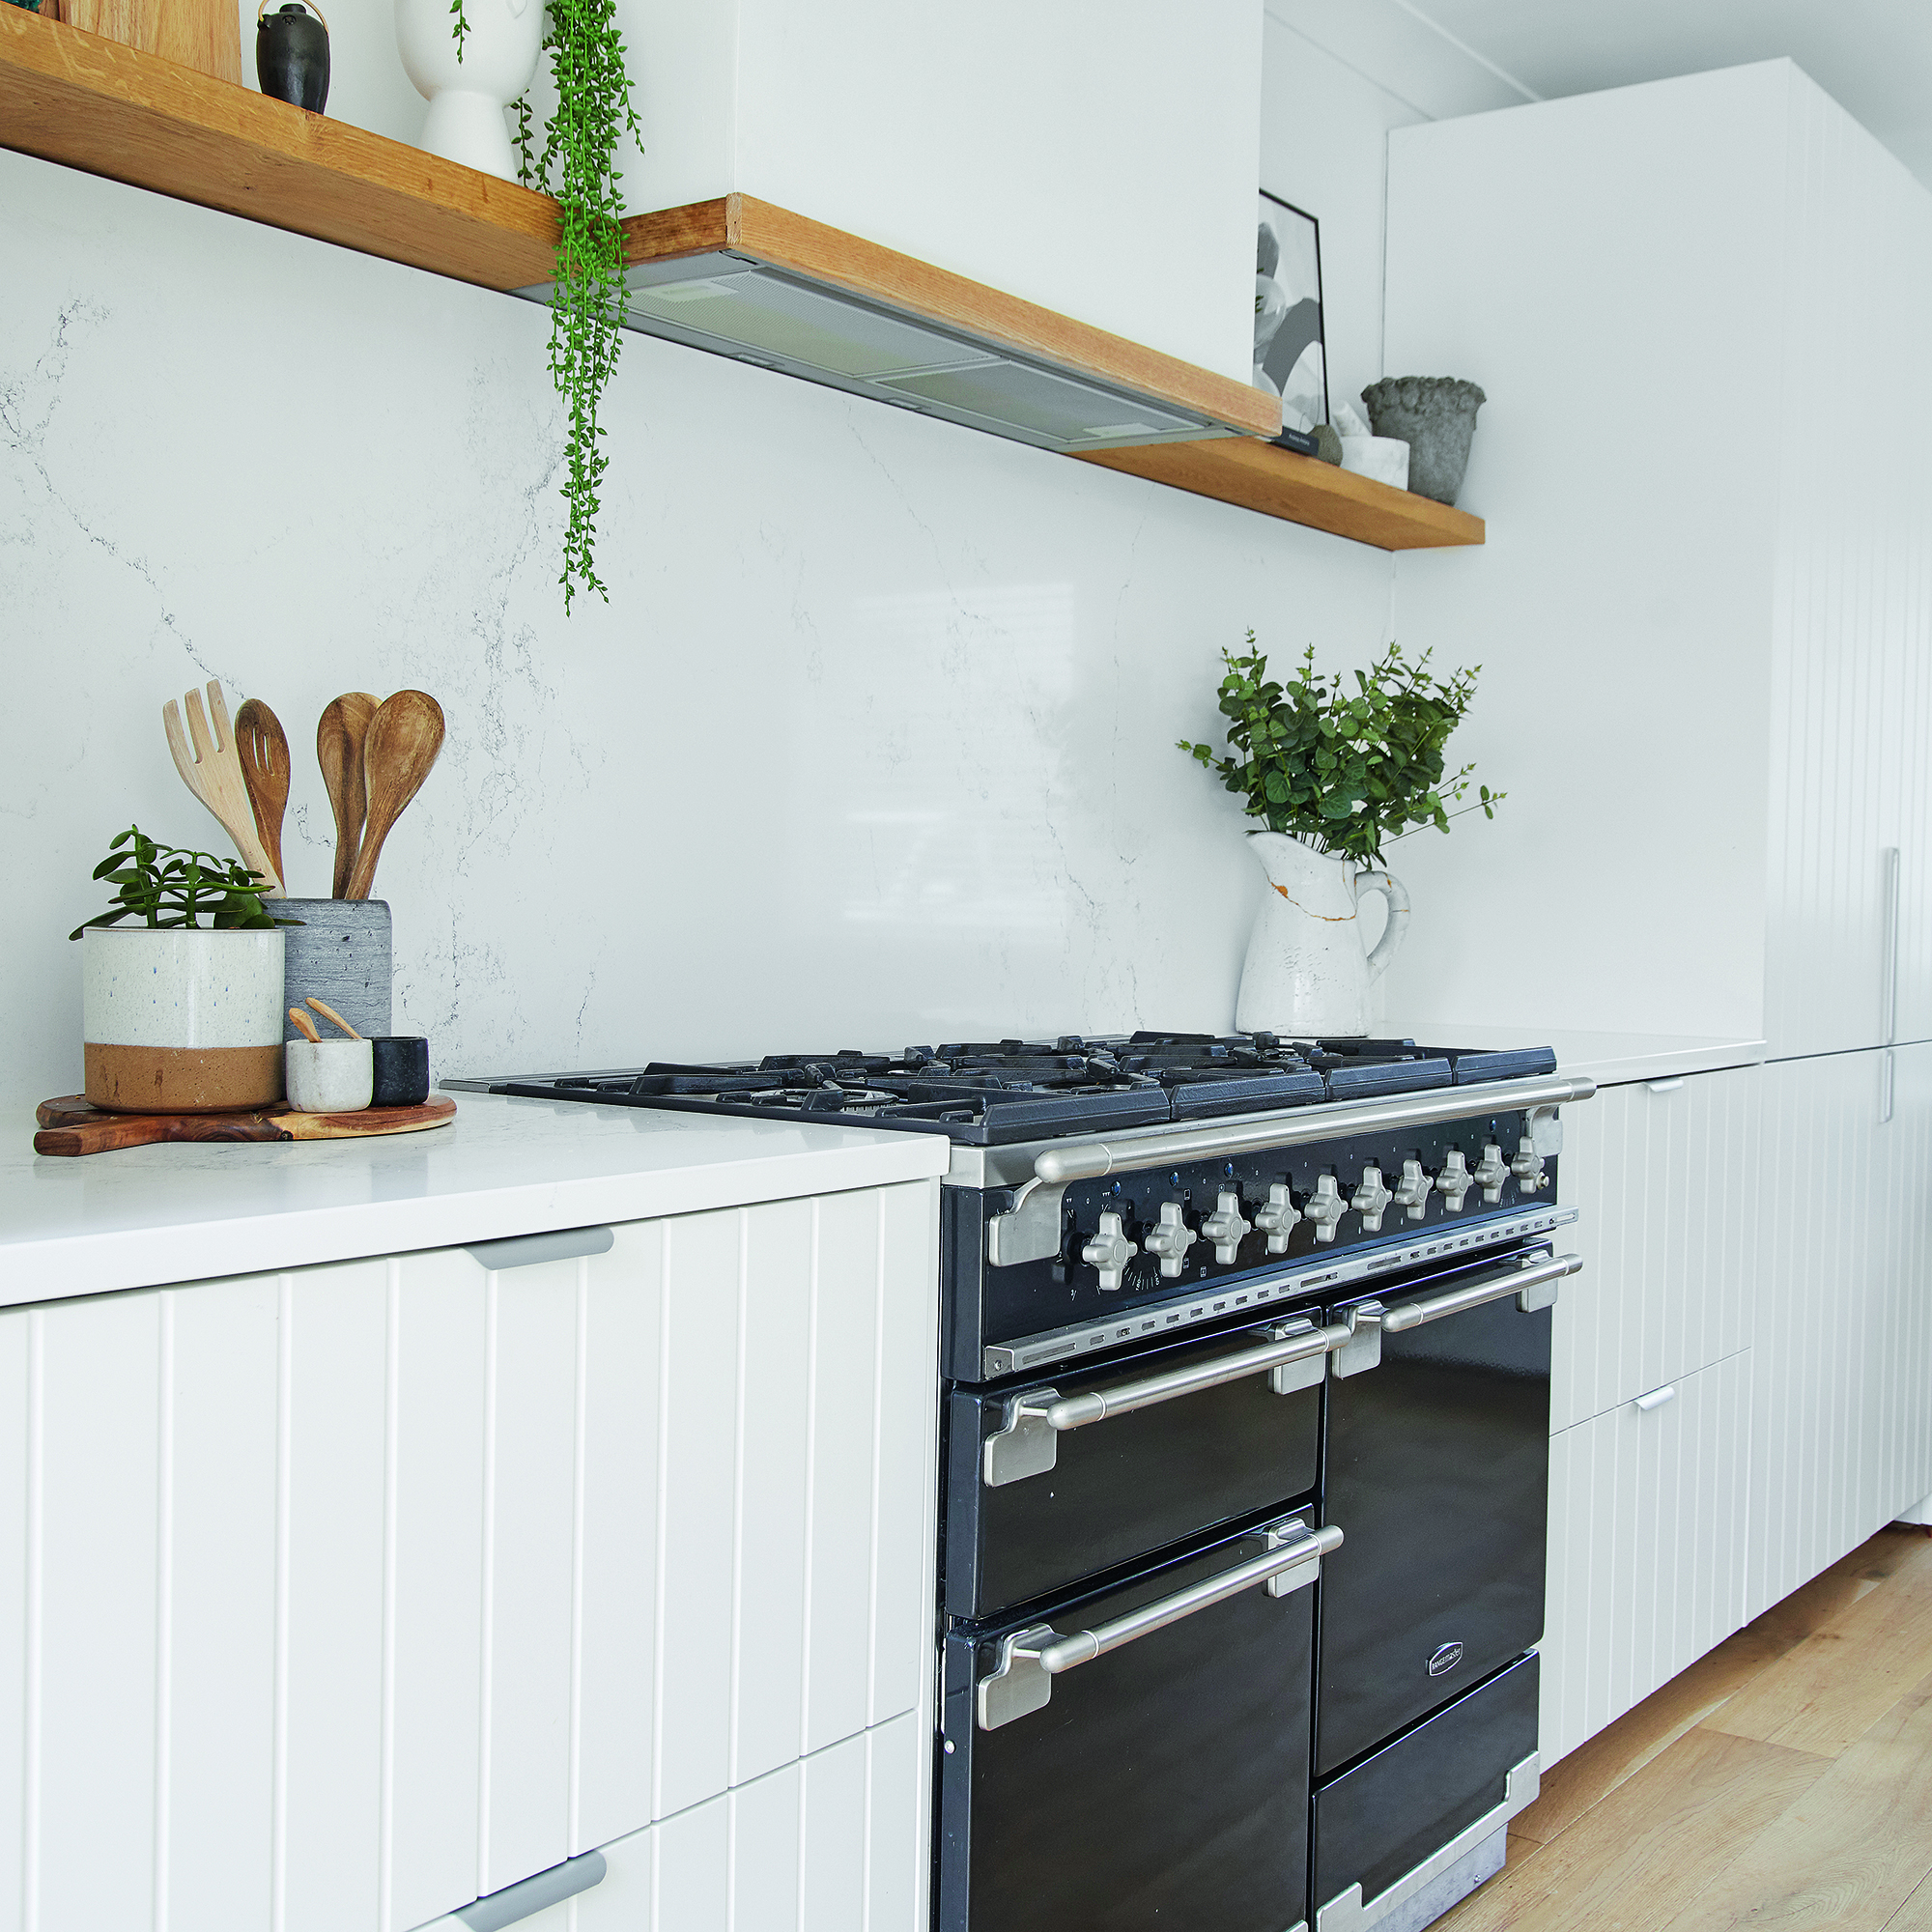 White kitchen with black range cooker